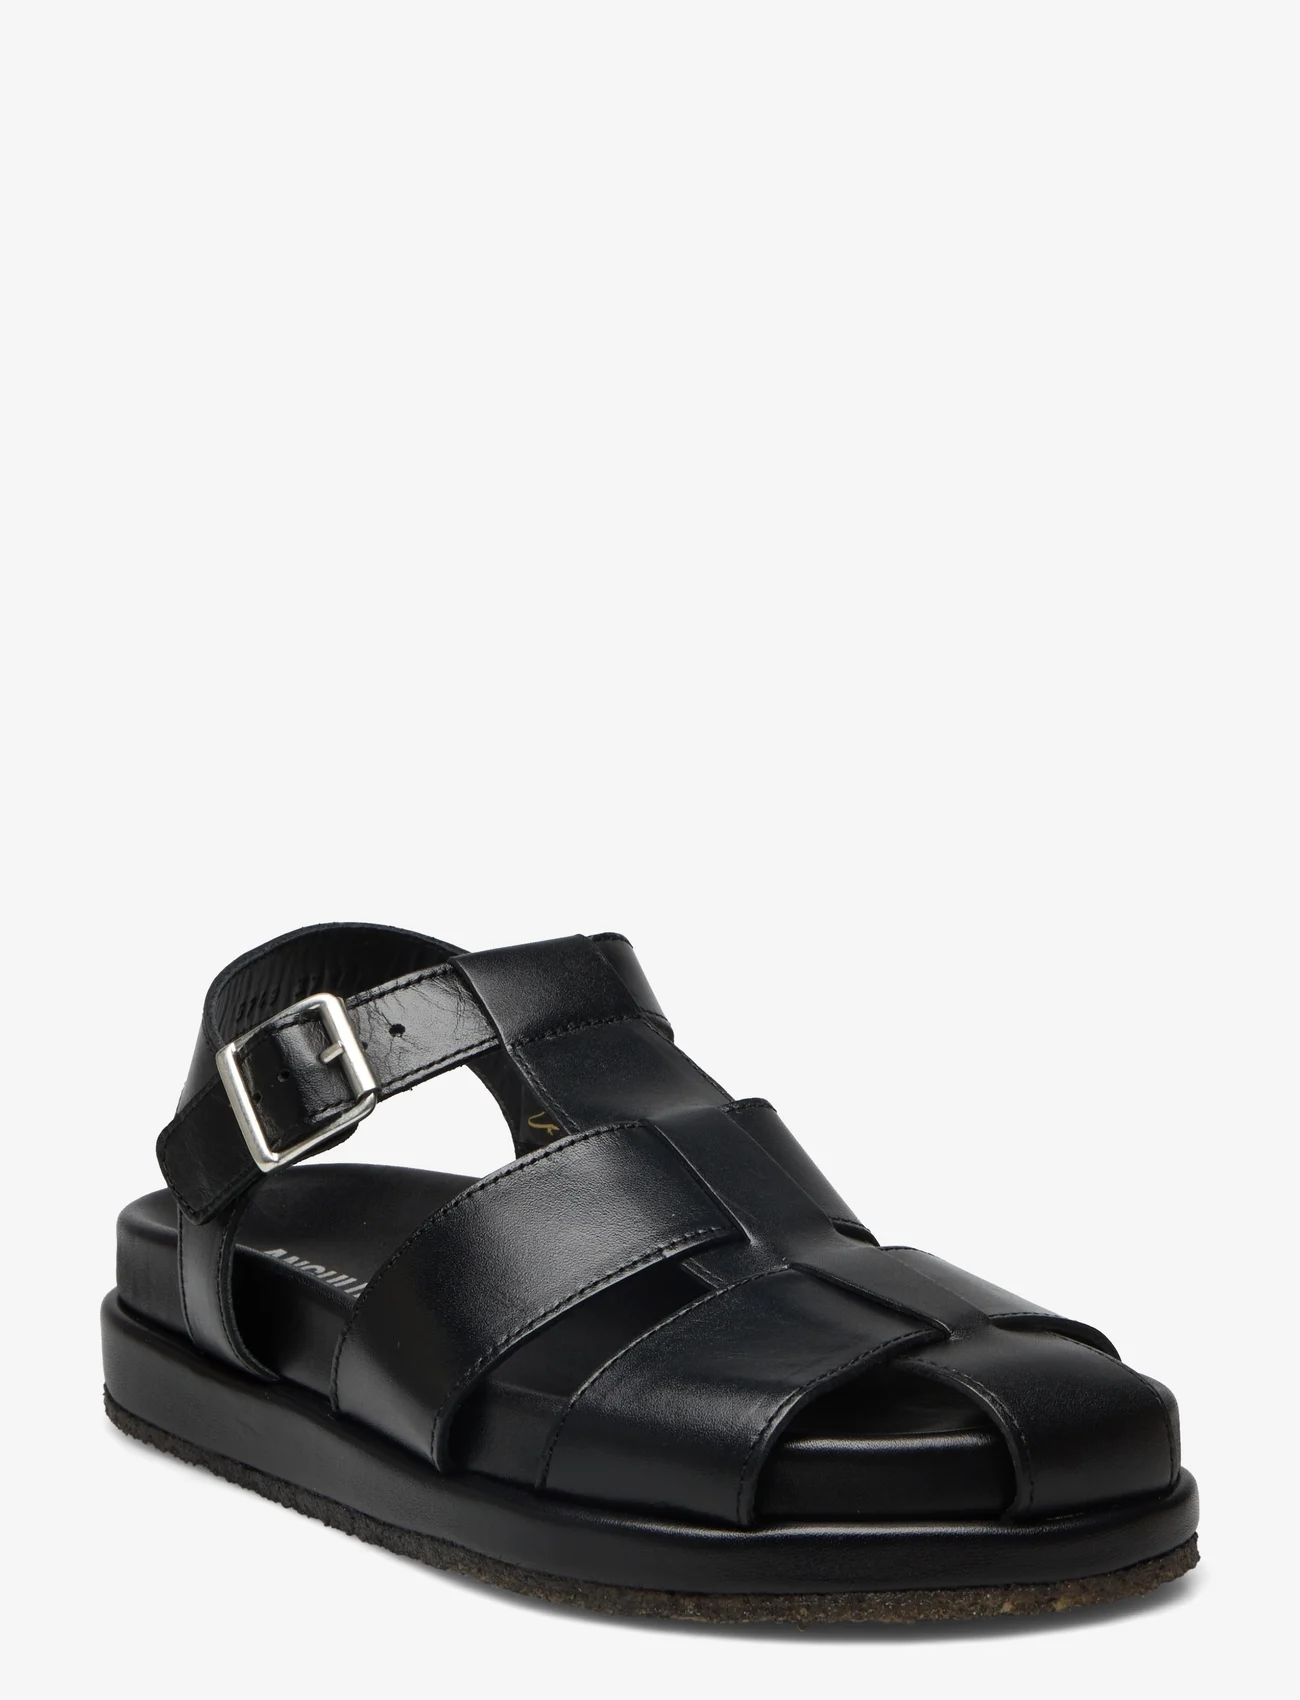 ANGULUS - Sandals - flat - open toe - op - platta sandaler - 1604/1785 black - 0